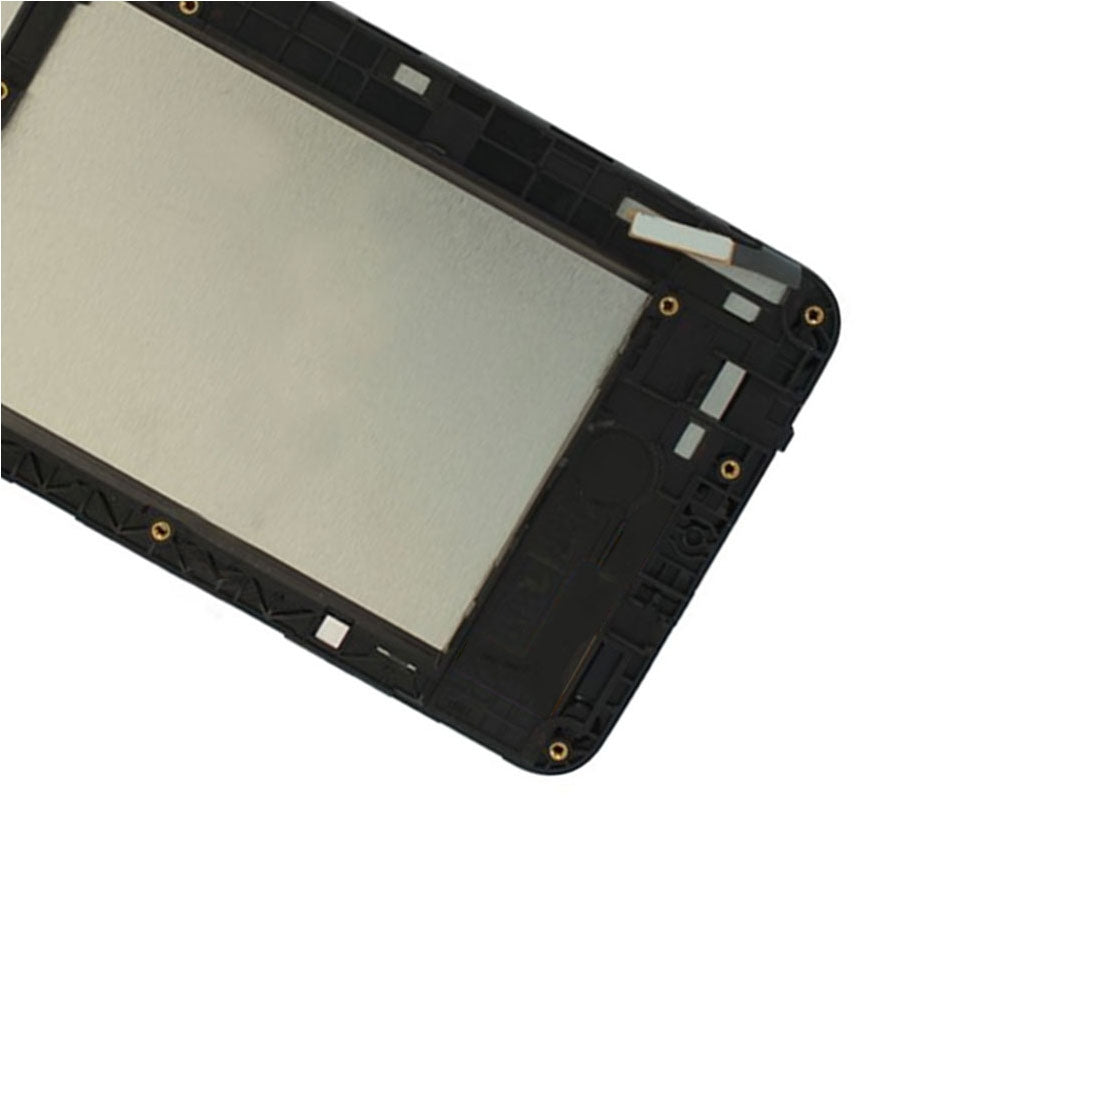 Ecran Complet LCD + Tactile + Châssis LG K4 2017 M160 Noir